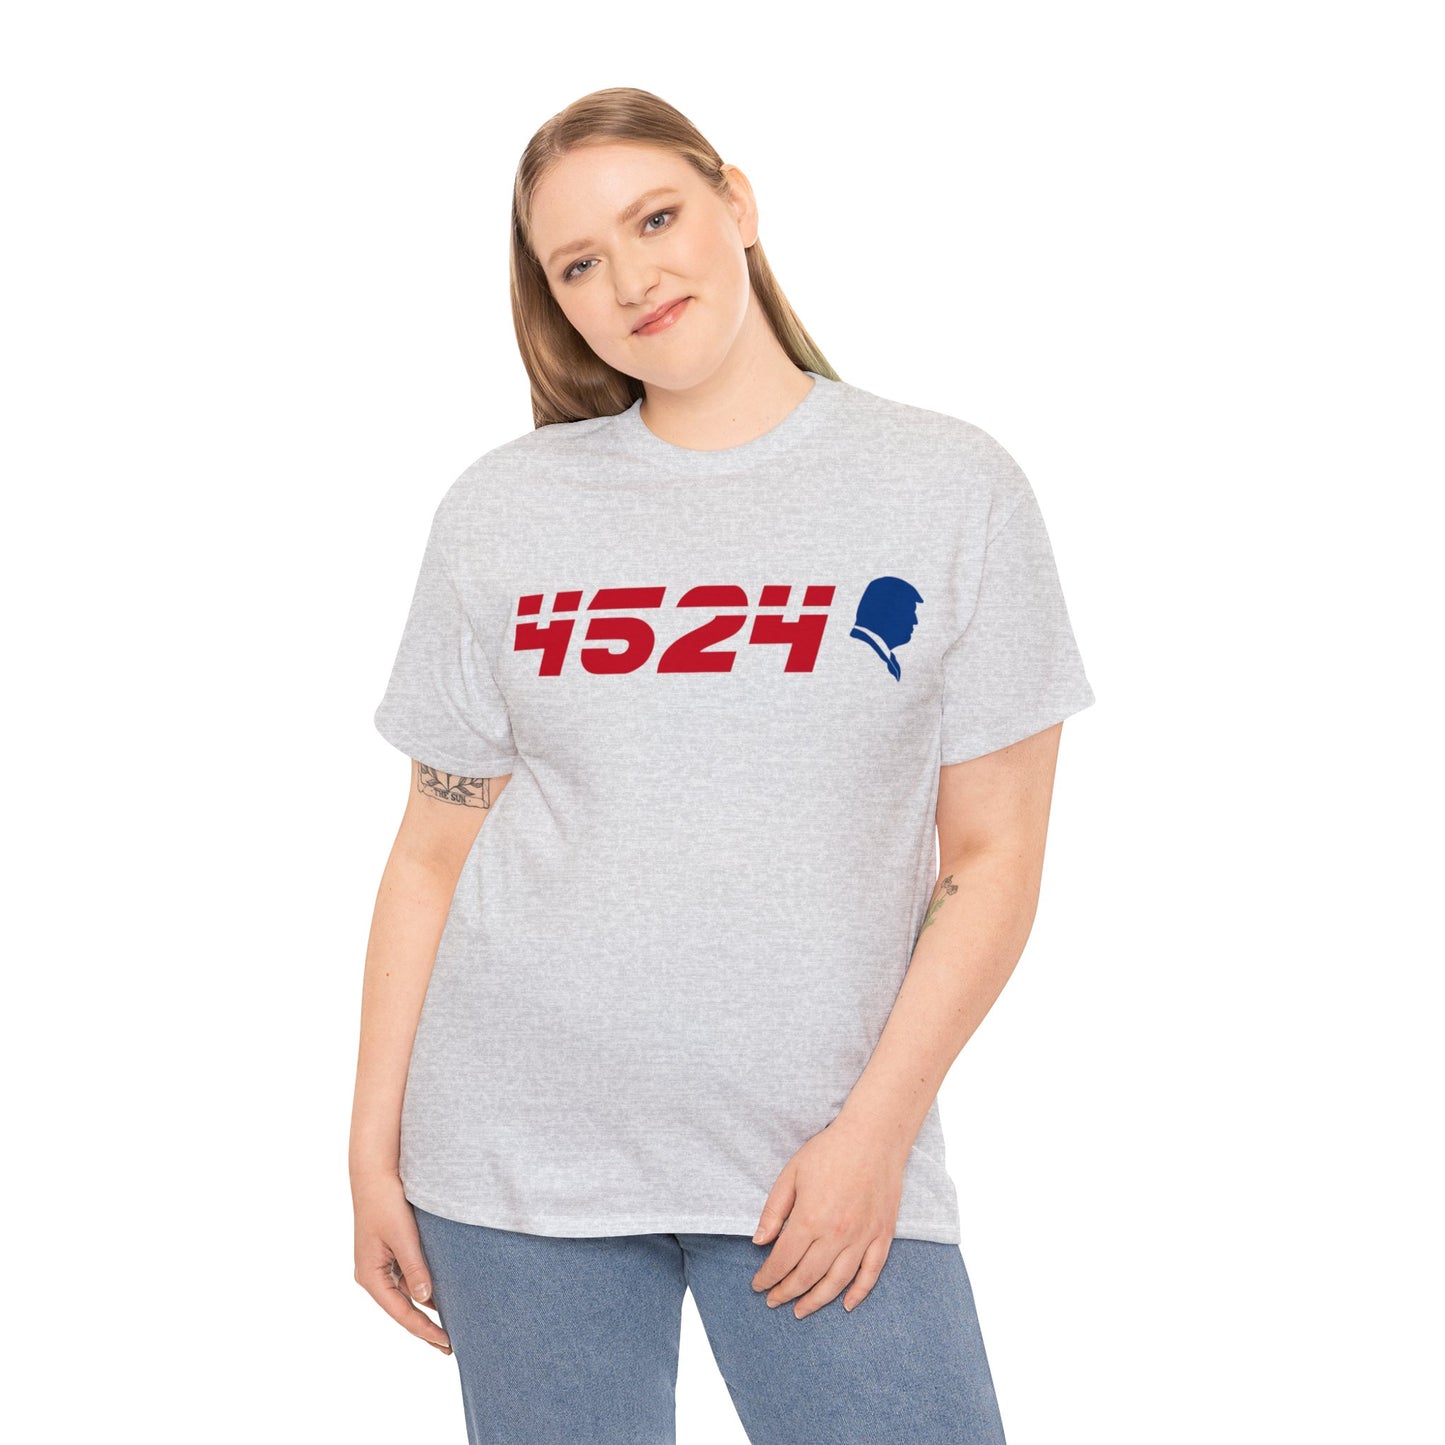 4524 Shirt